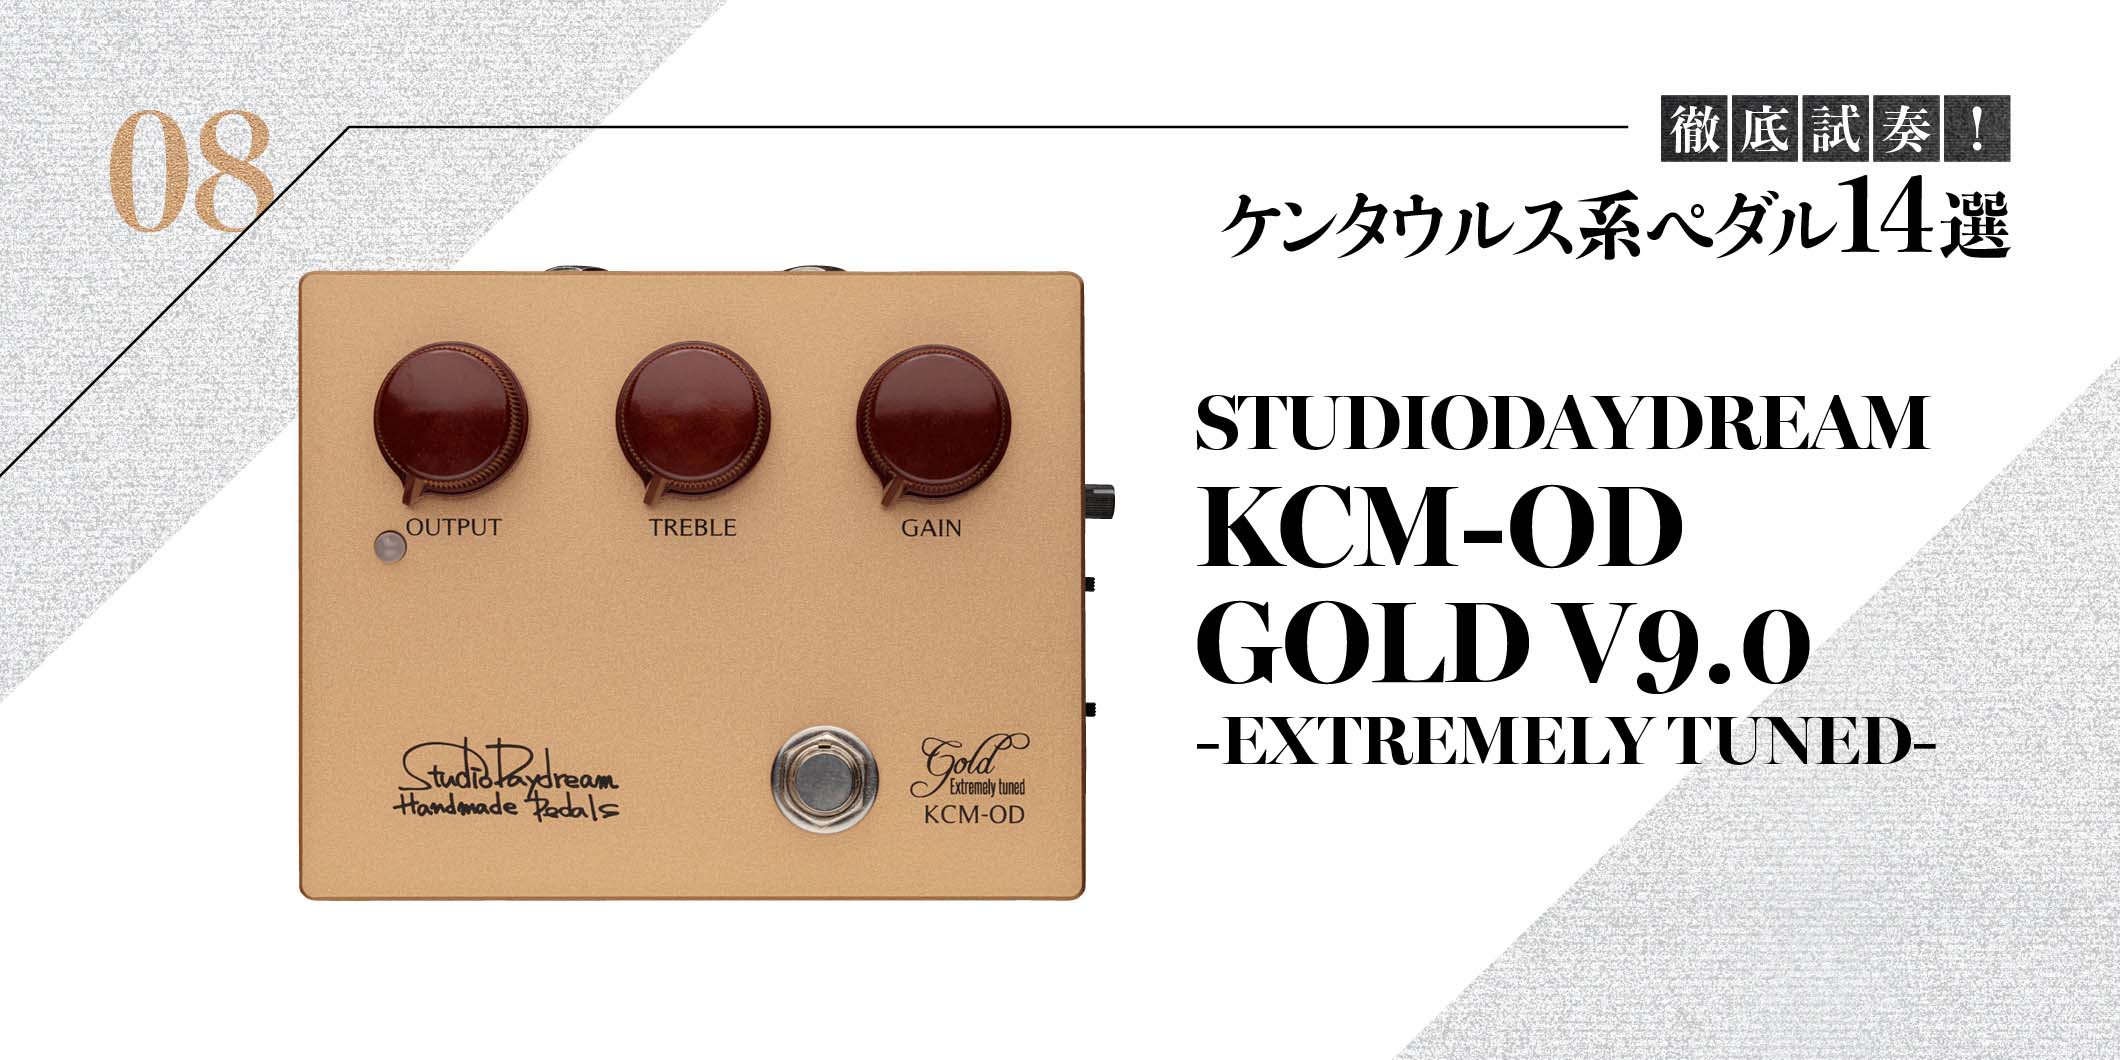 STUDIODAYDREAM／KCM-OD GOLD V9.0 -EXTREMELY TUNED-〜徹底試奏 